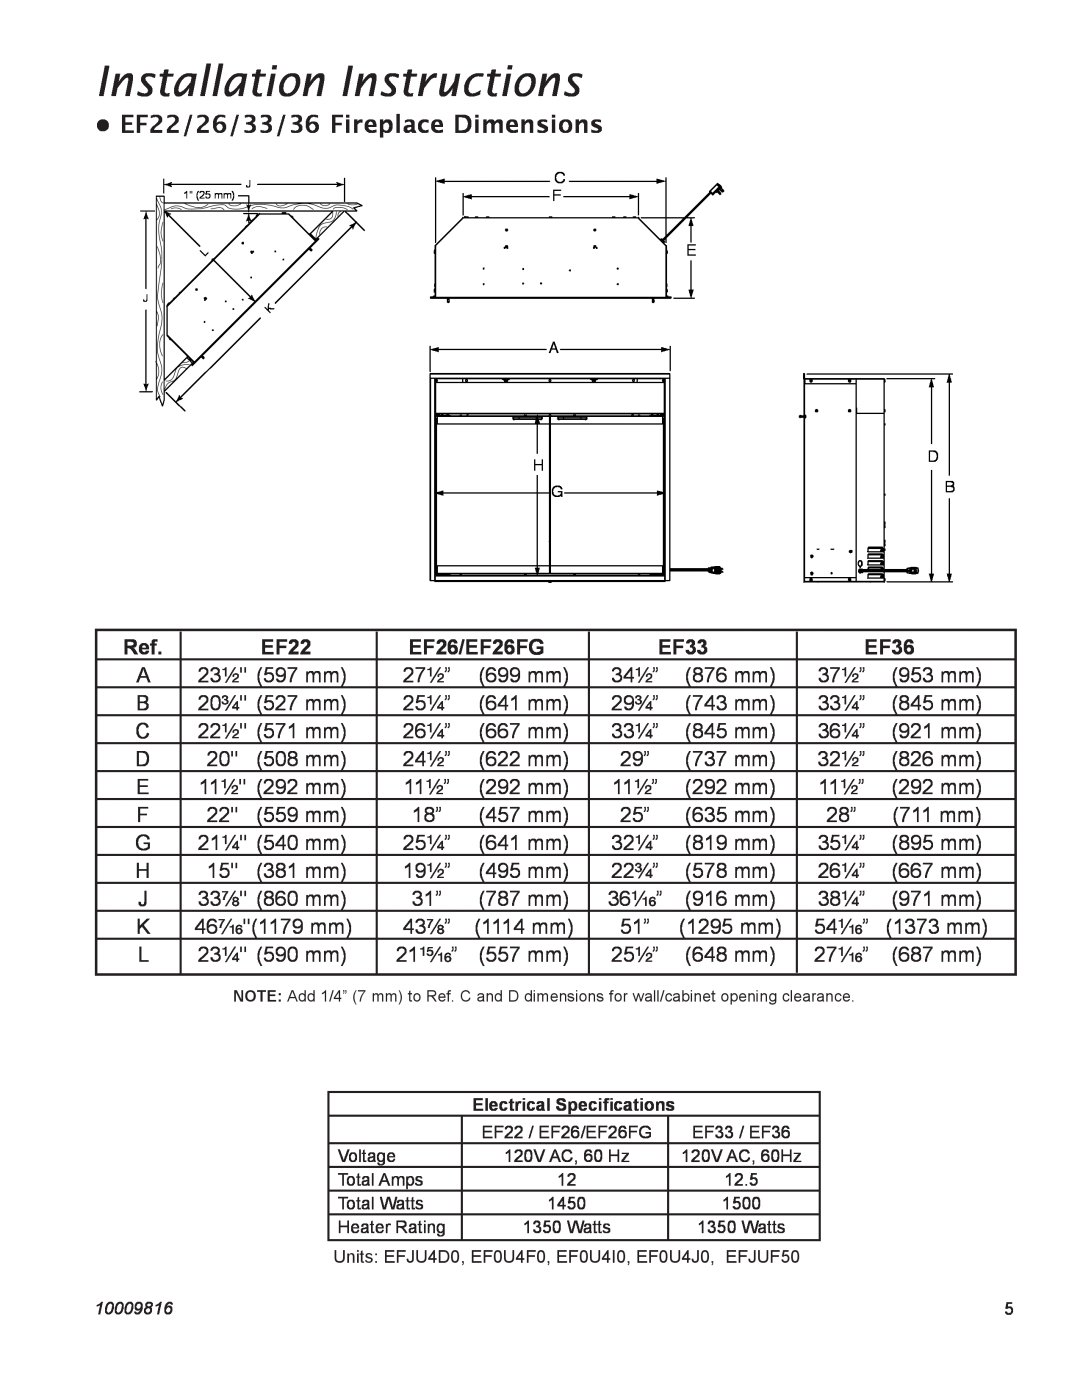 CFM Corporation EF36, EF26FG, EF33 manual Installation Instructions, EF22/26/33/36 Fireplace Dimensions 